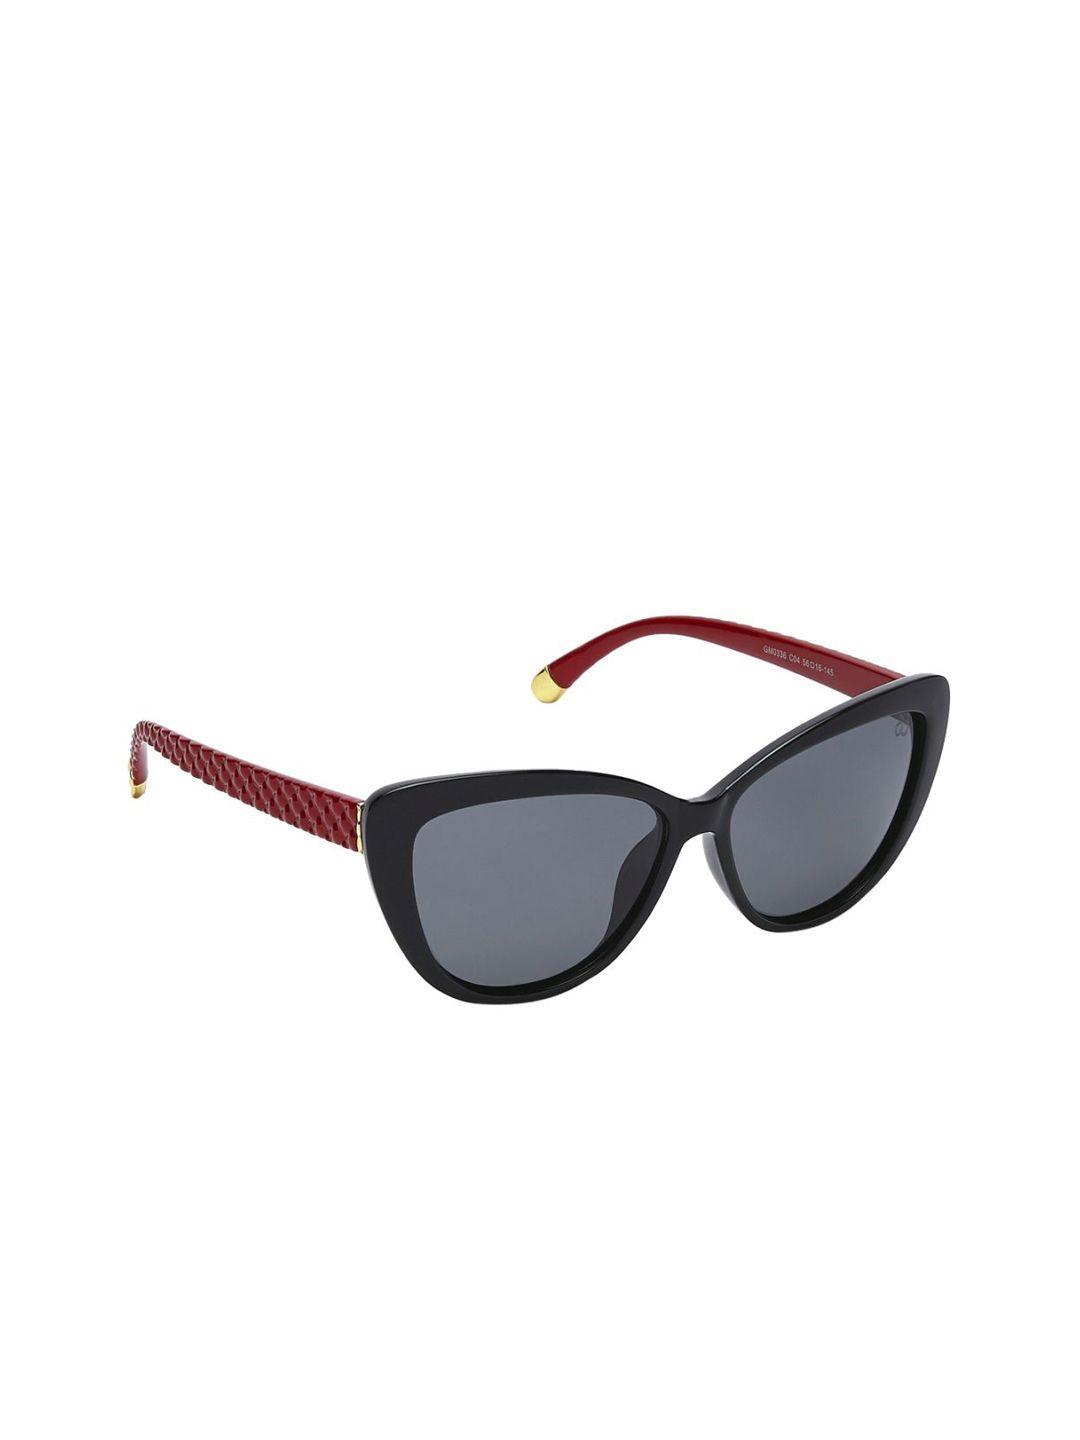 gio collection women cateye sunglasses gm0336c04